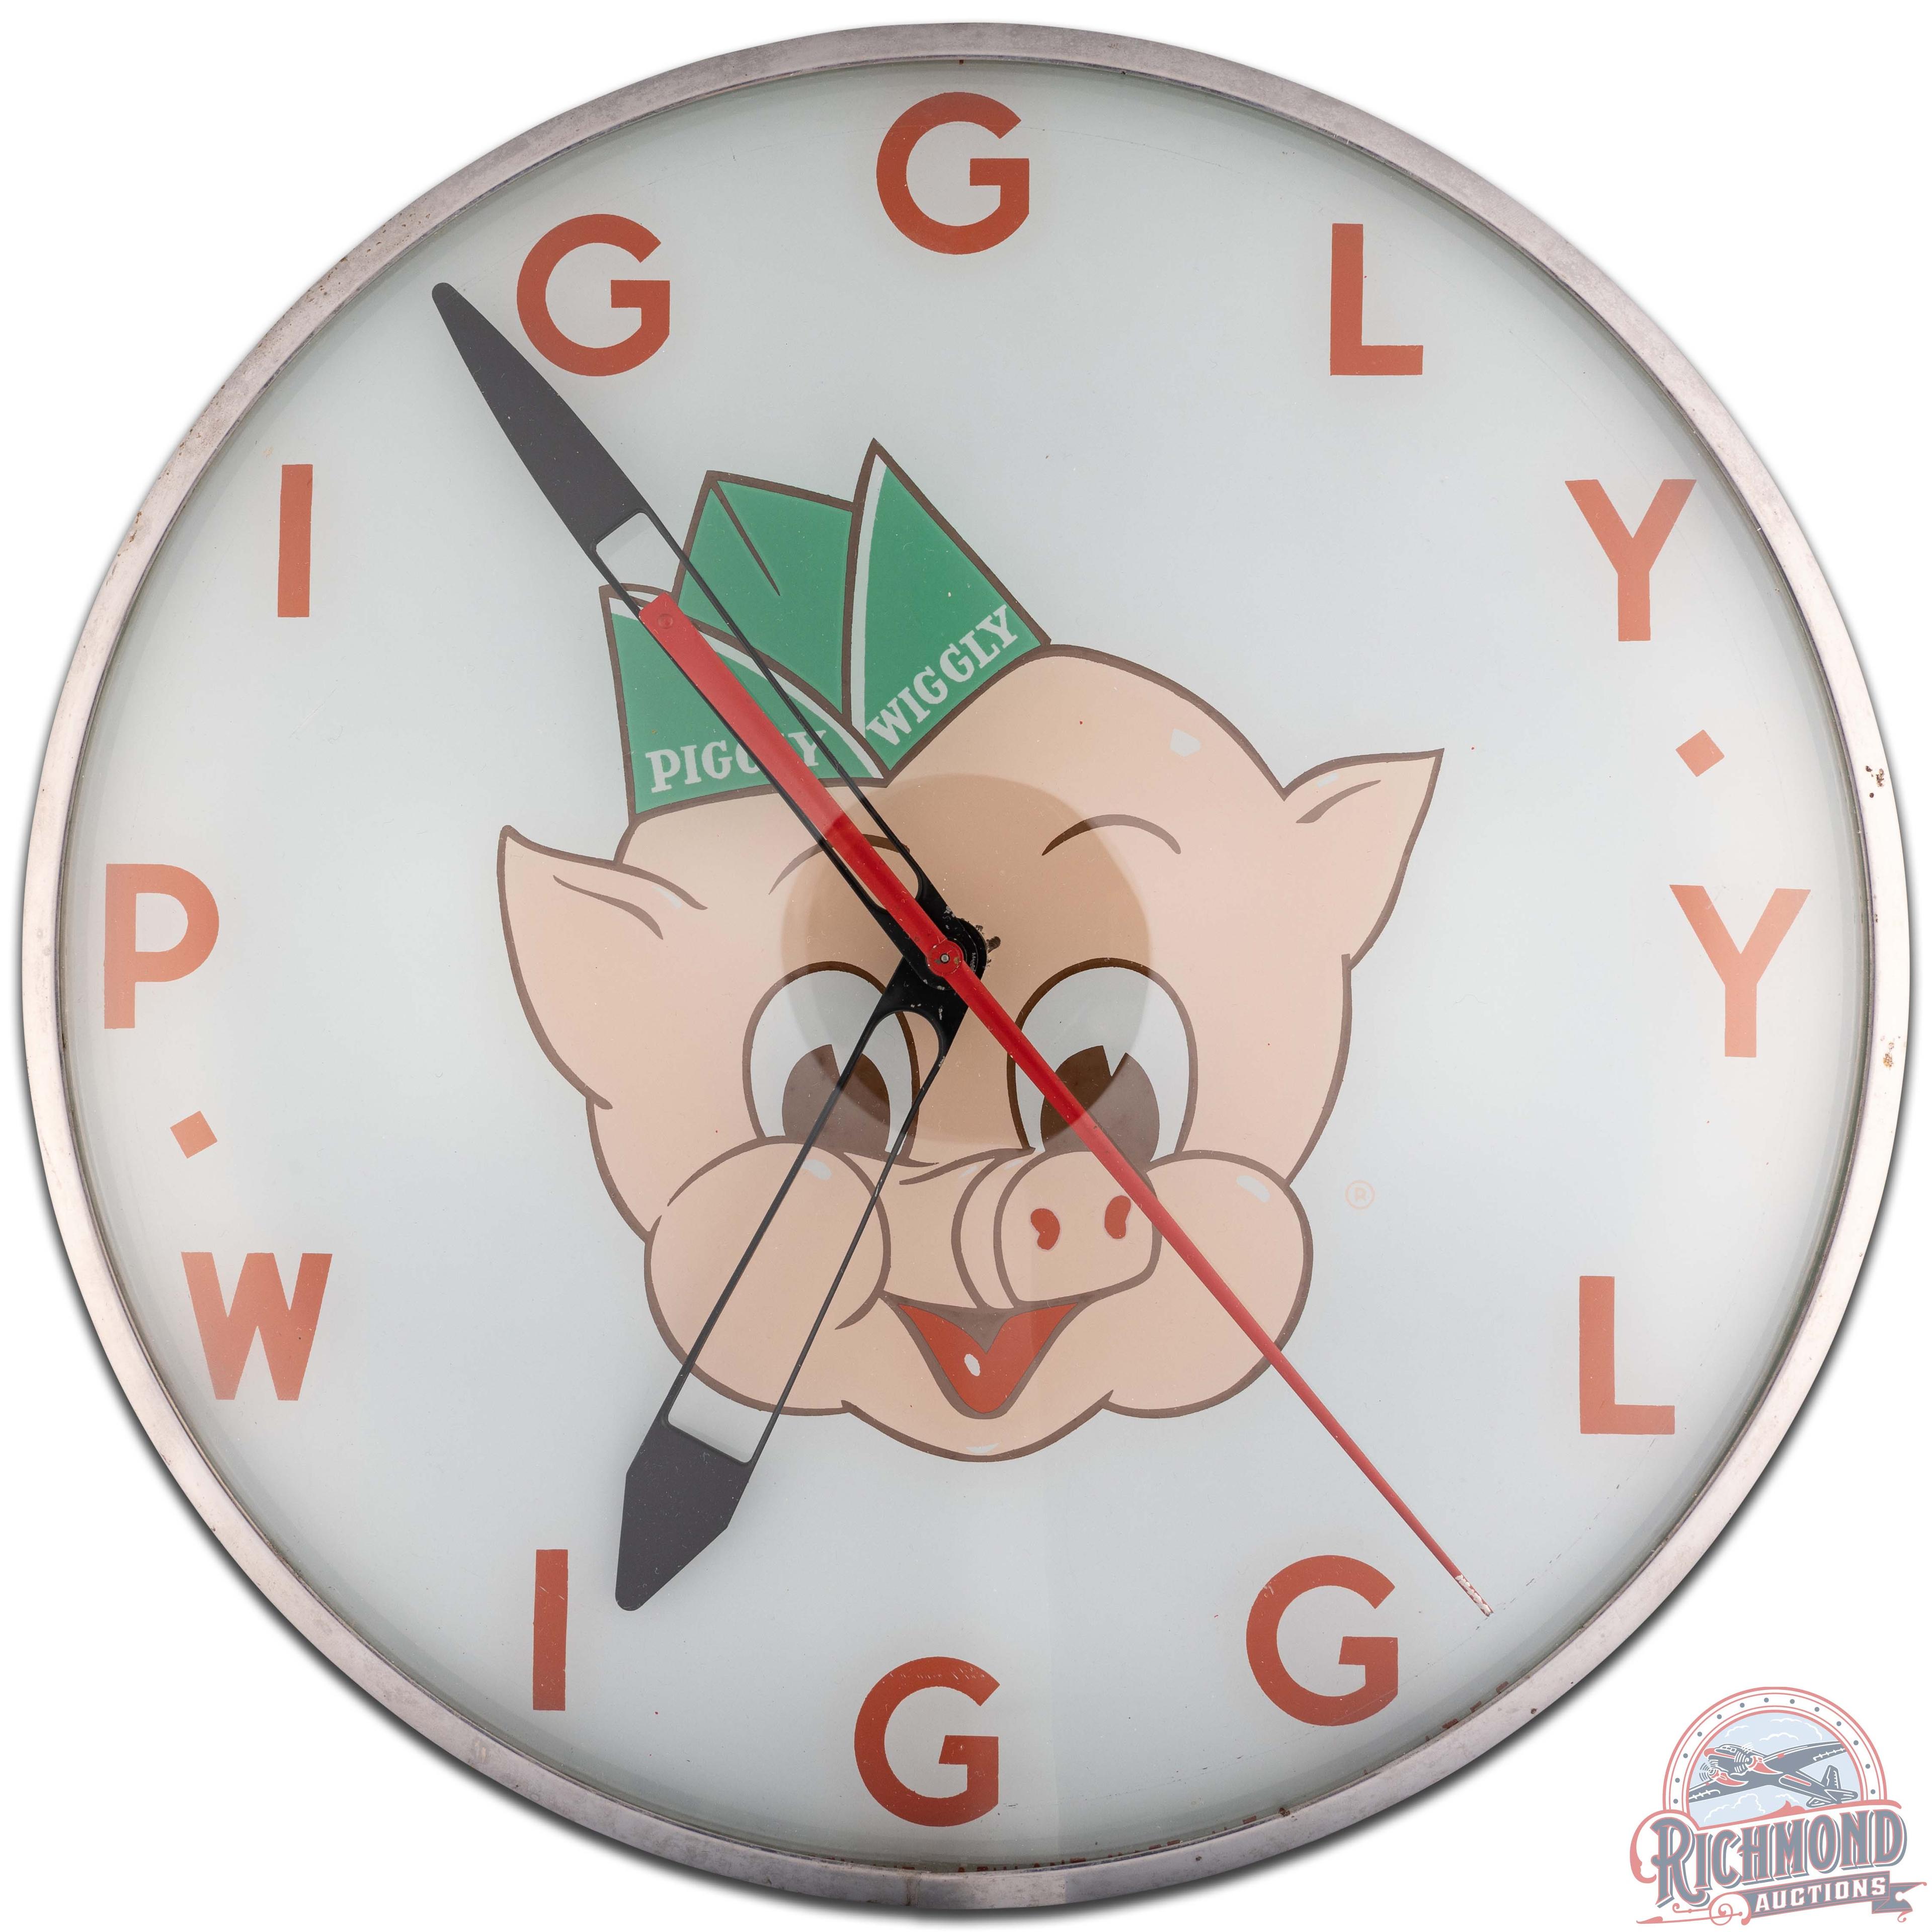 Piggly Wiggly 15" Telechron Advertising Clock w/ Pig Logo